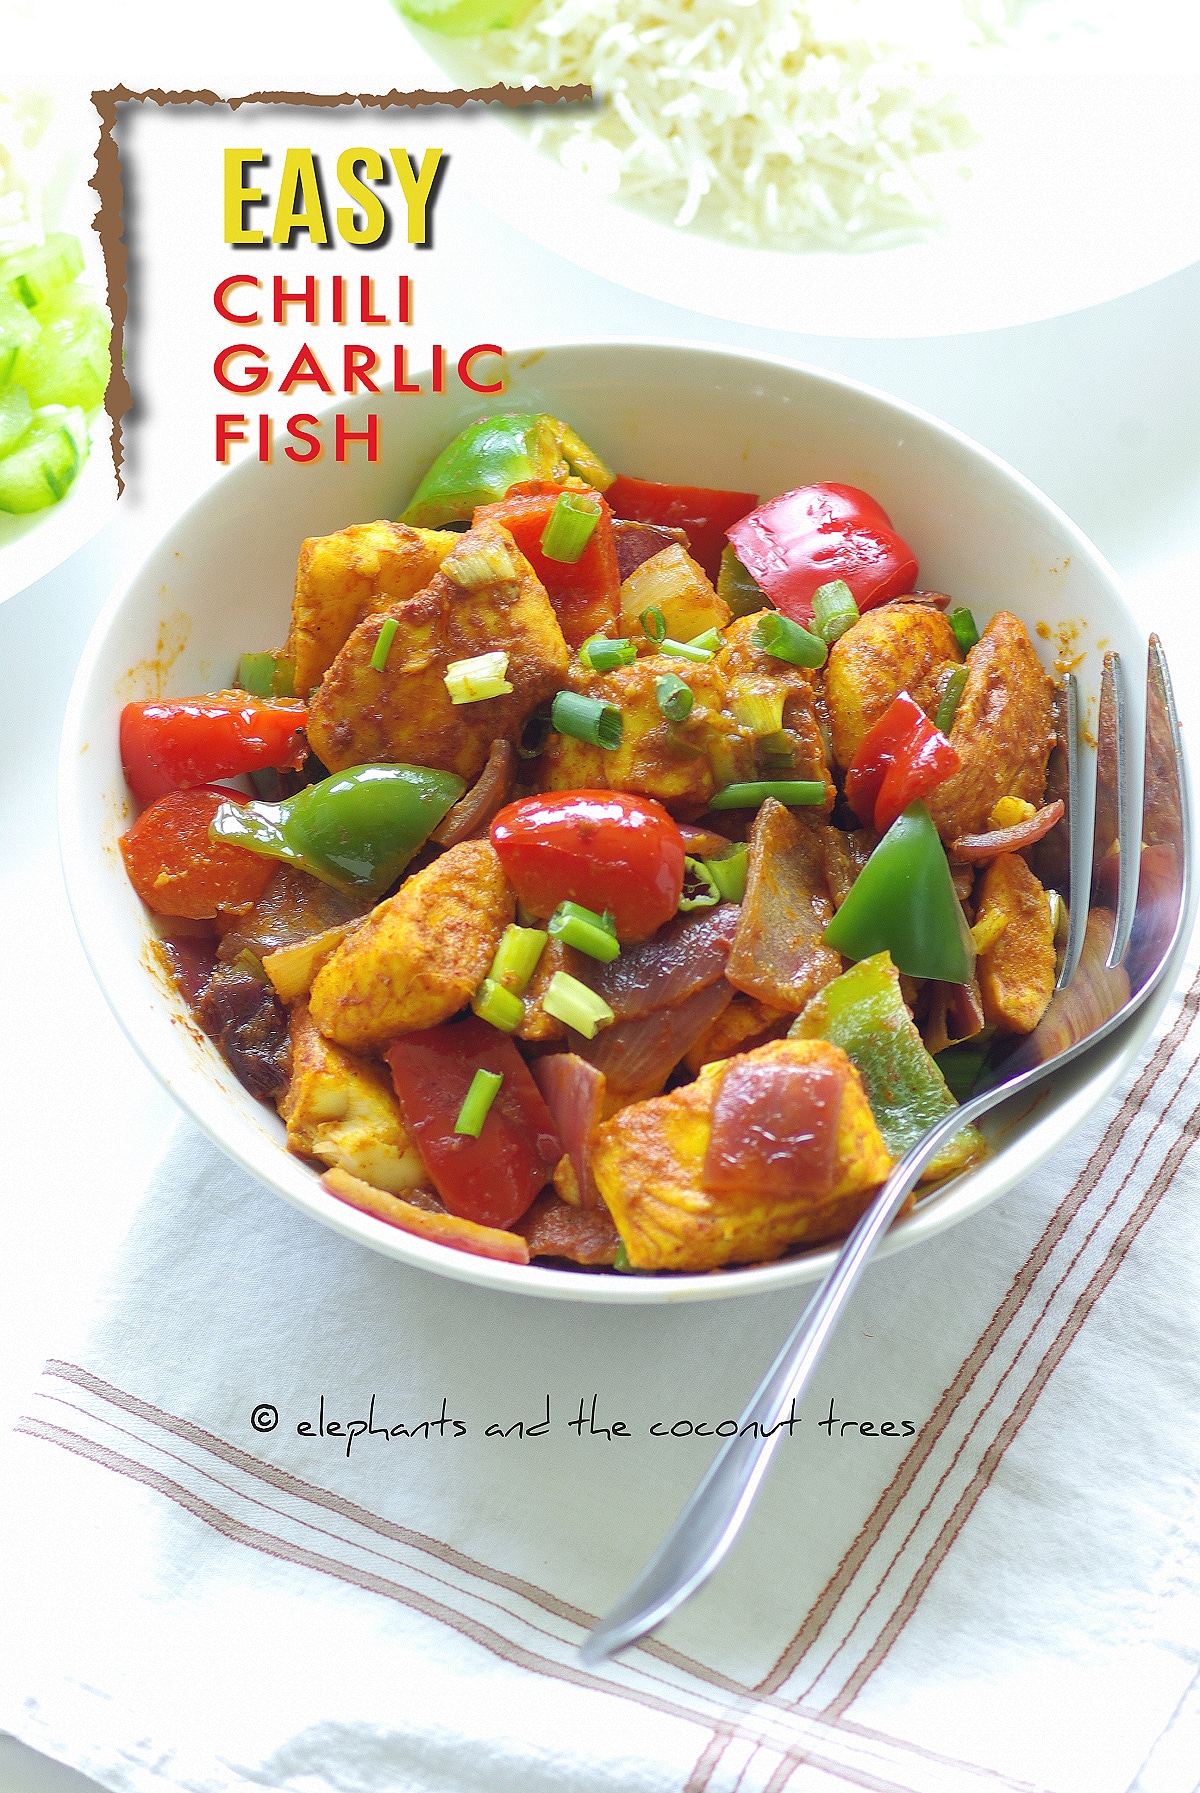 Chili garlic fish -the easy way / Fish glazed in chili garlic sauce